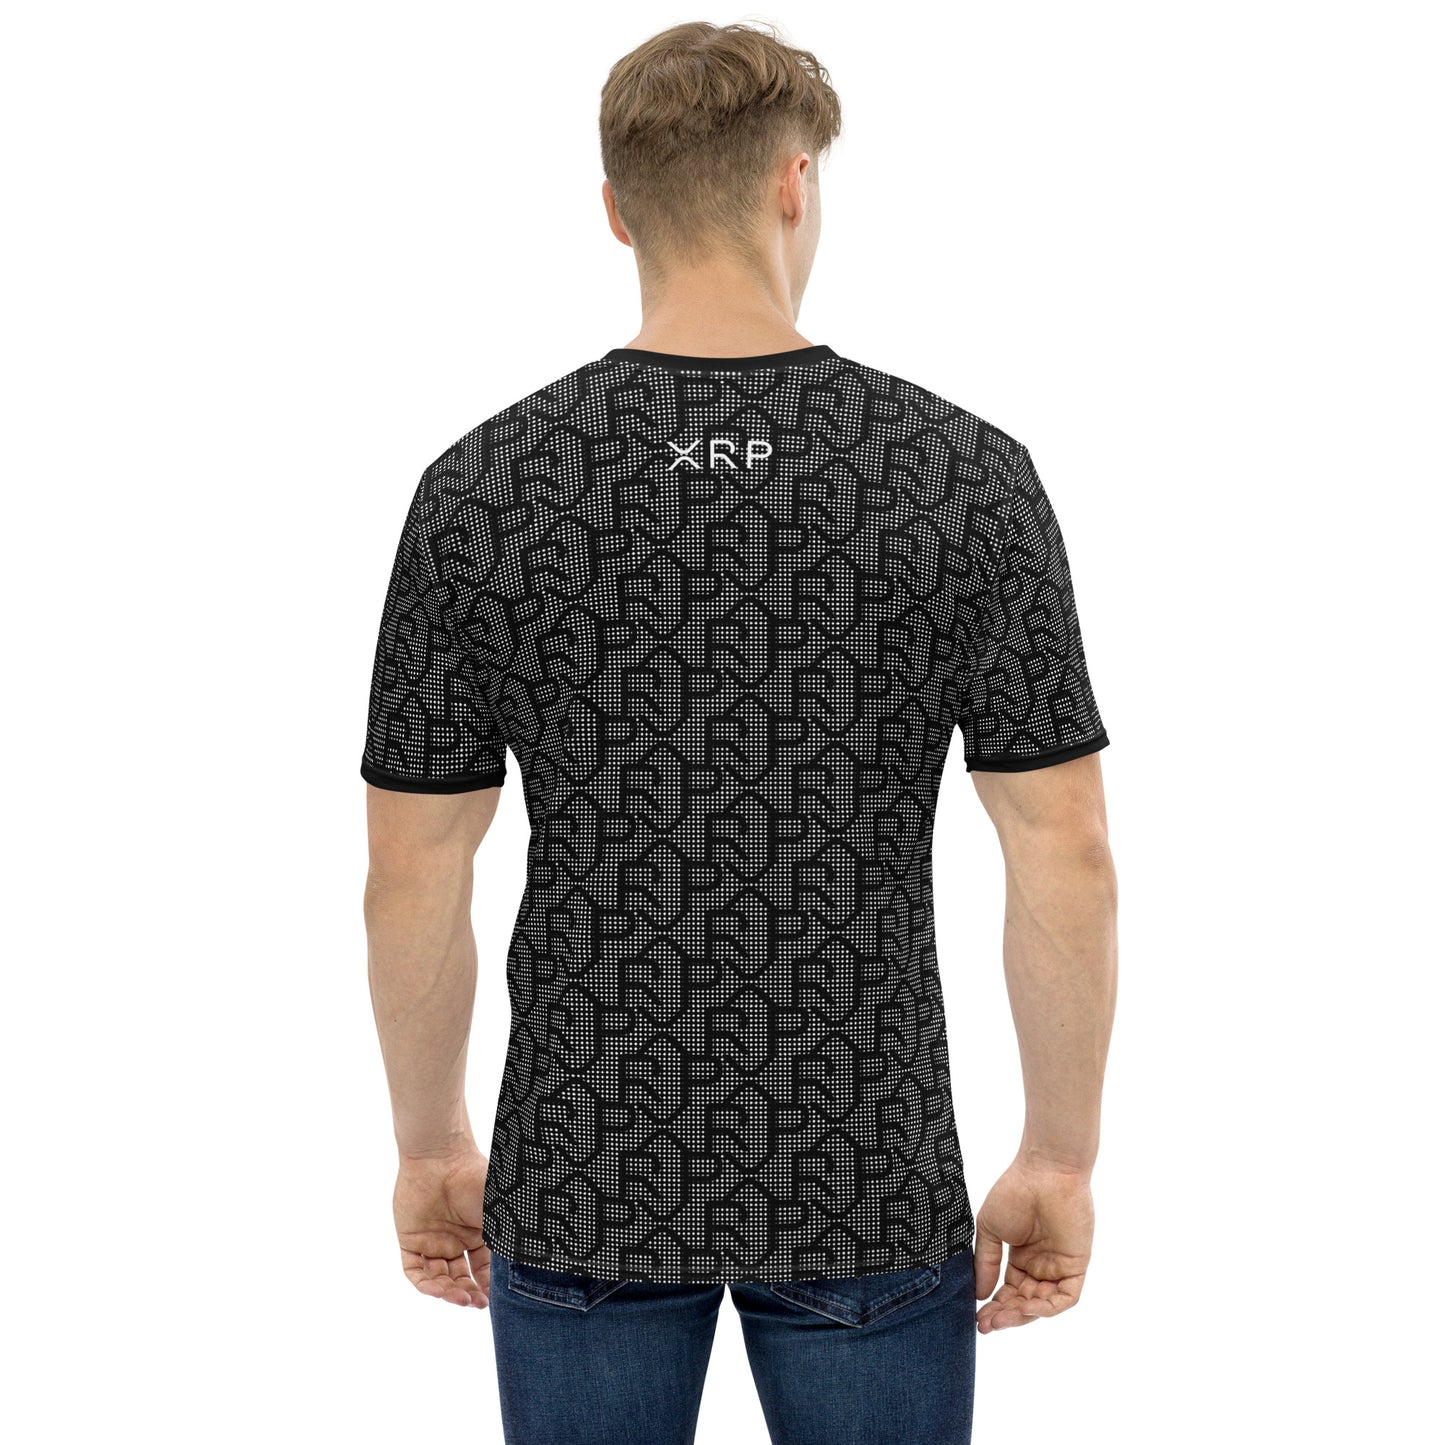 Xrp Dots T-Shirt